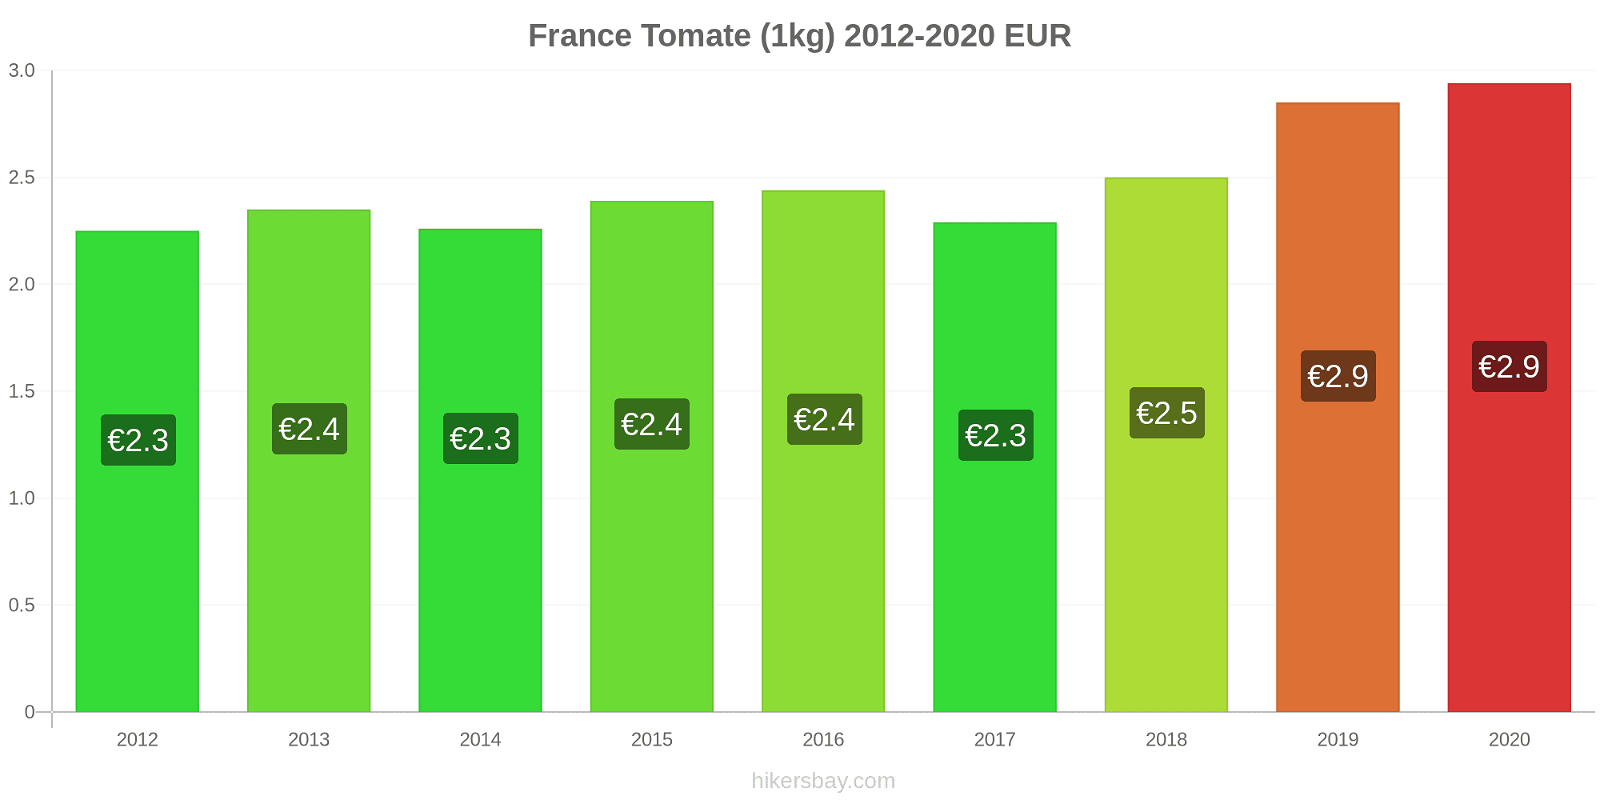 France changements de prix Tomate (1kg) hikersbay.com